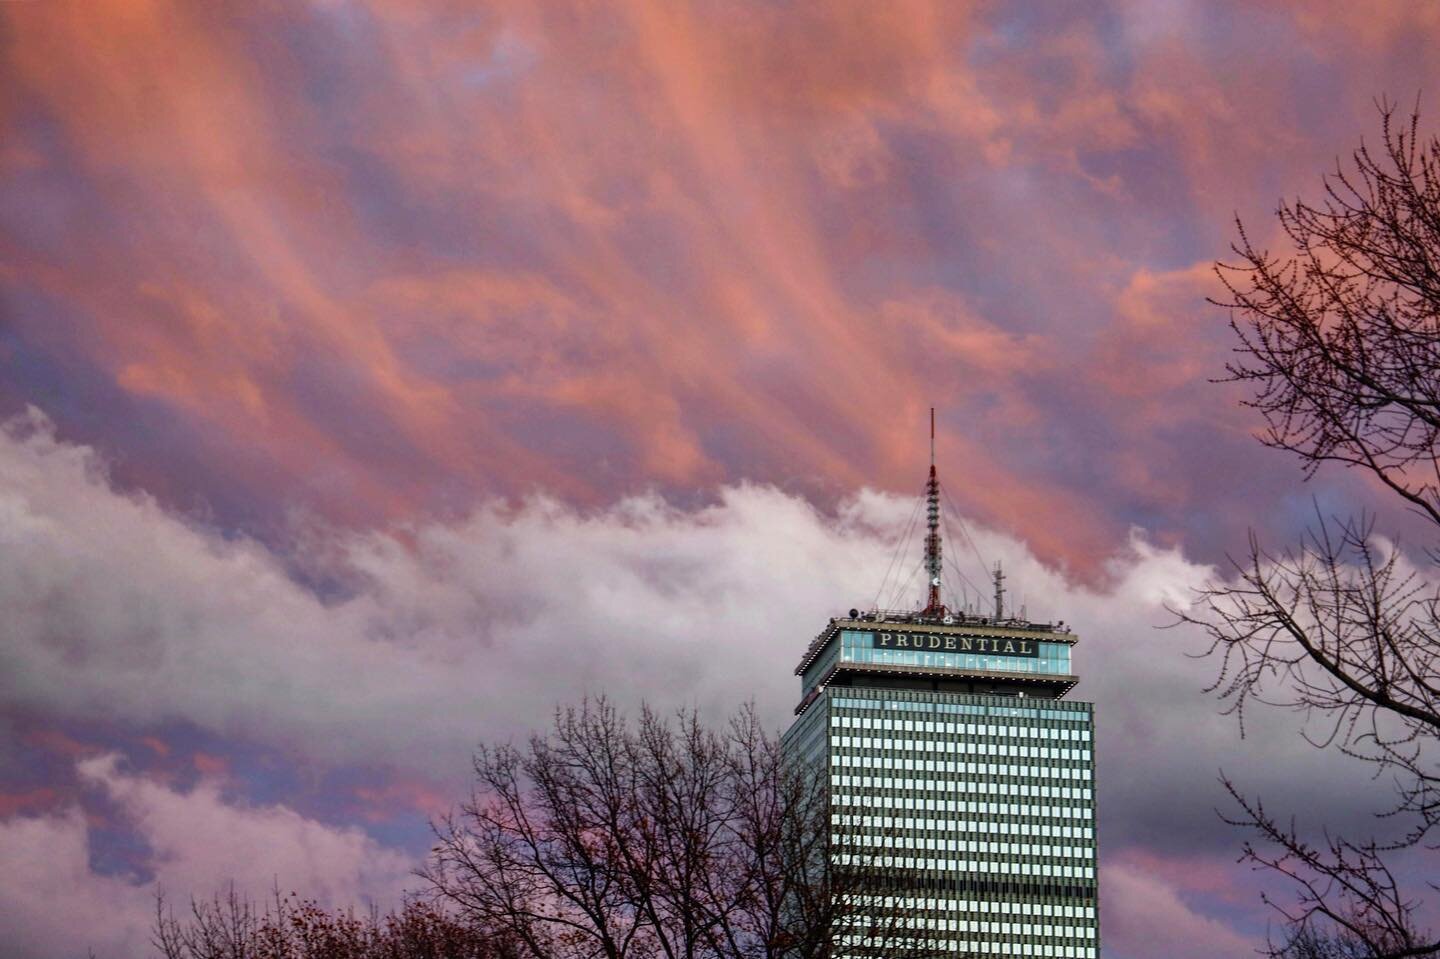 Sky Situation  @pruboston #crazycloudage #purplehaze #alwayslookingup #fenway #prudentialcenter #boston #boston_igers